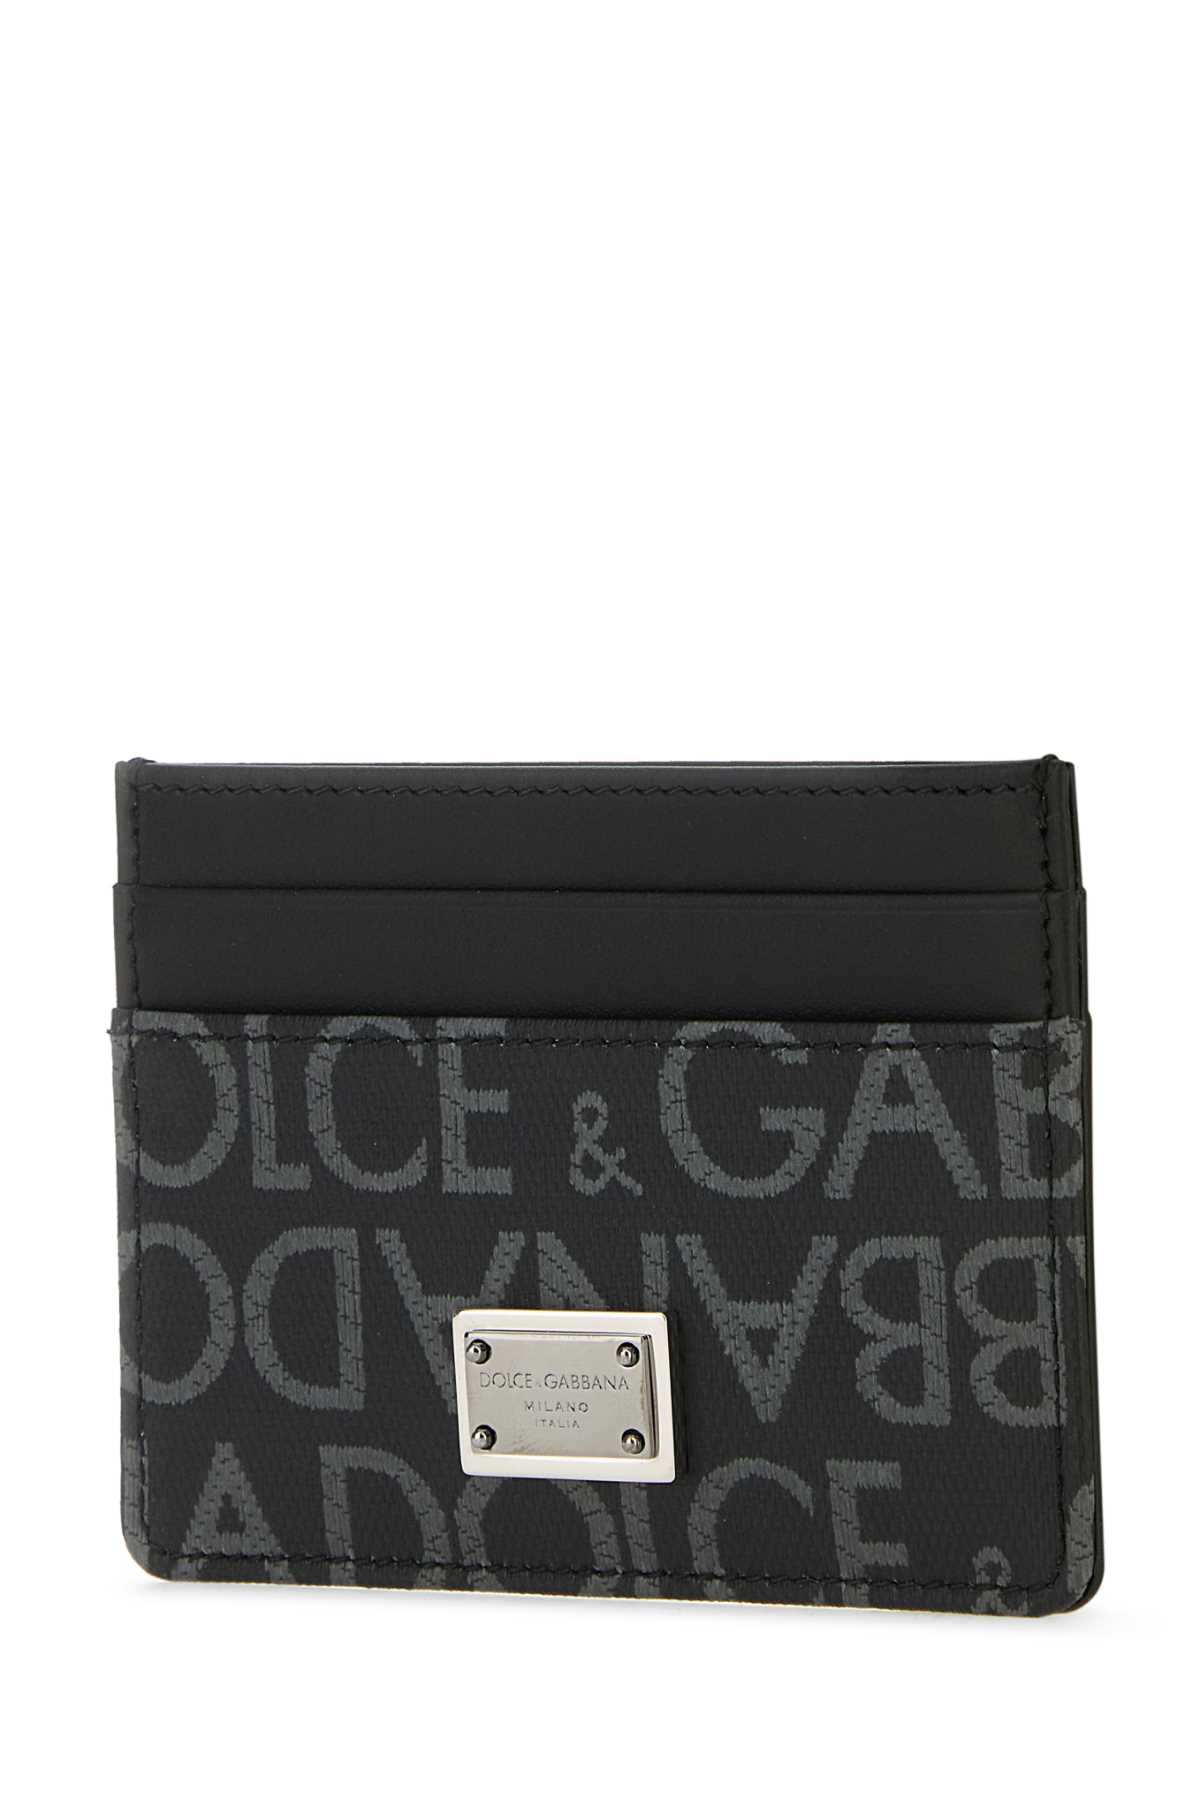 Dolce & Gabbana Black Leather Card Holder In Nerogrigio